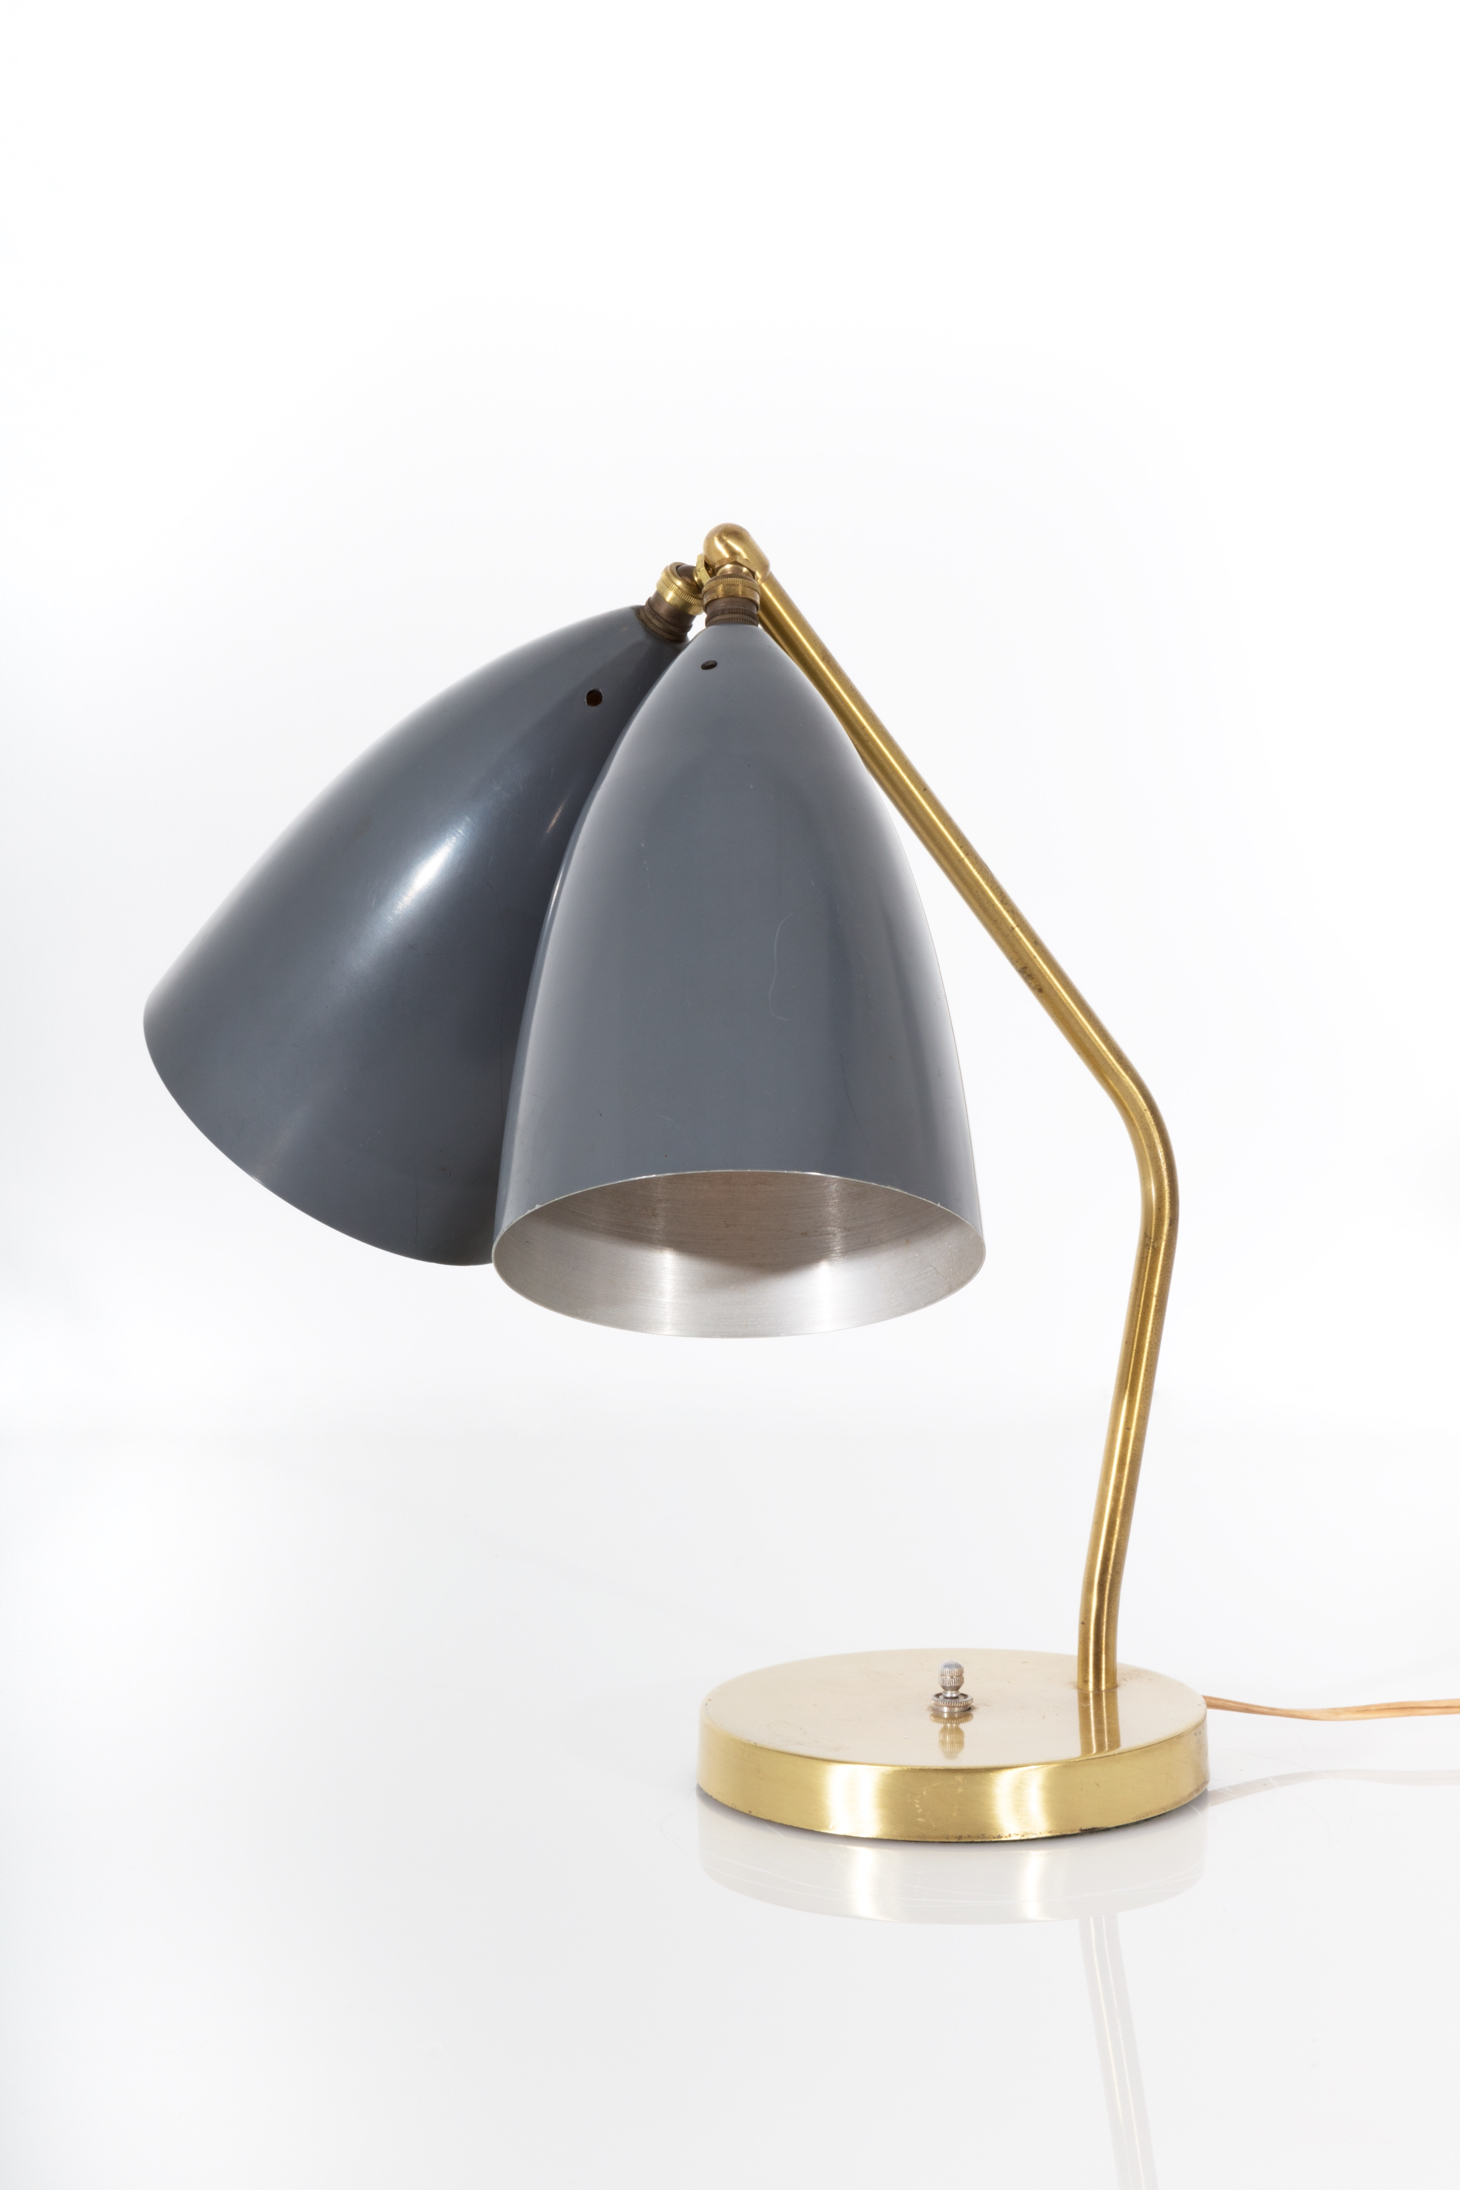 Greta Magnusson Grossman, Dual-head table lamp, 1948. (TL818) - R & Company